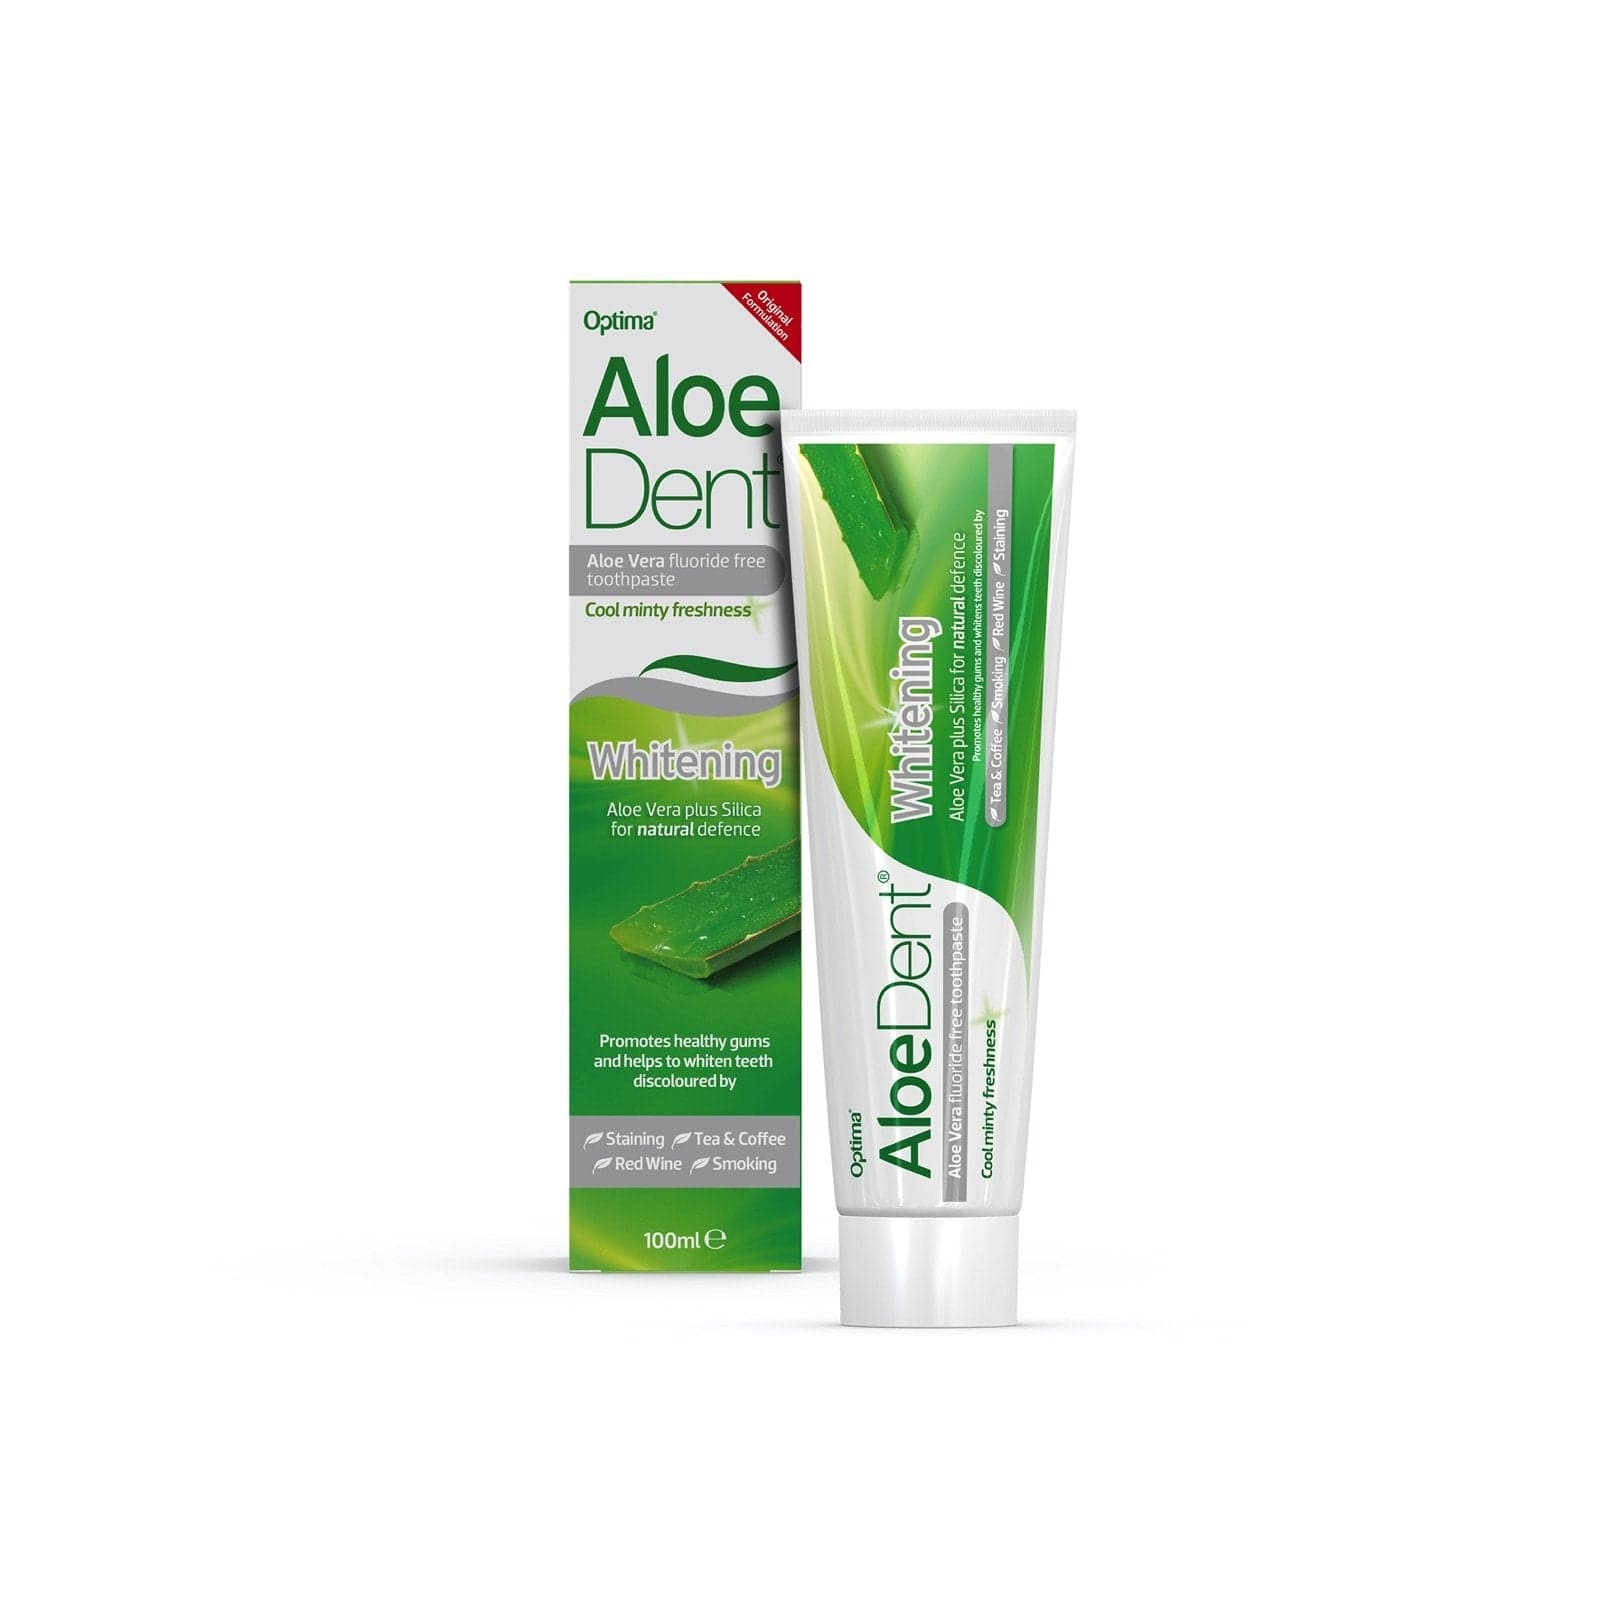 Aloe Dent Whitening Toothpaste Fluoride Free 100ml